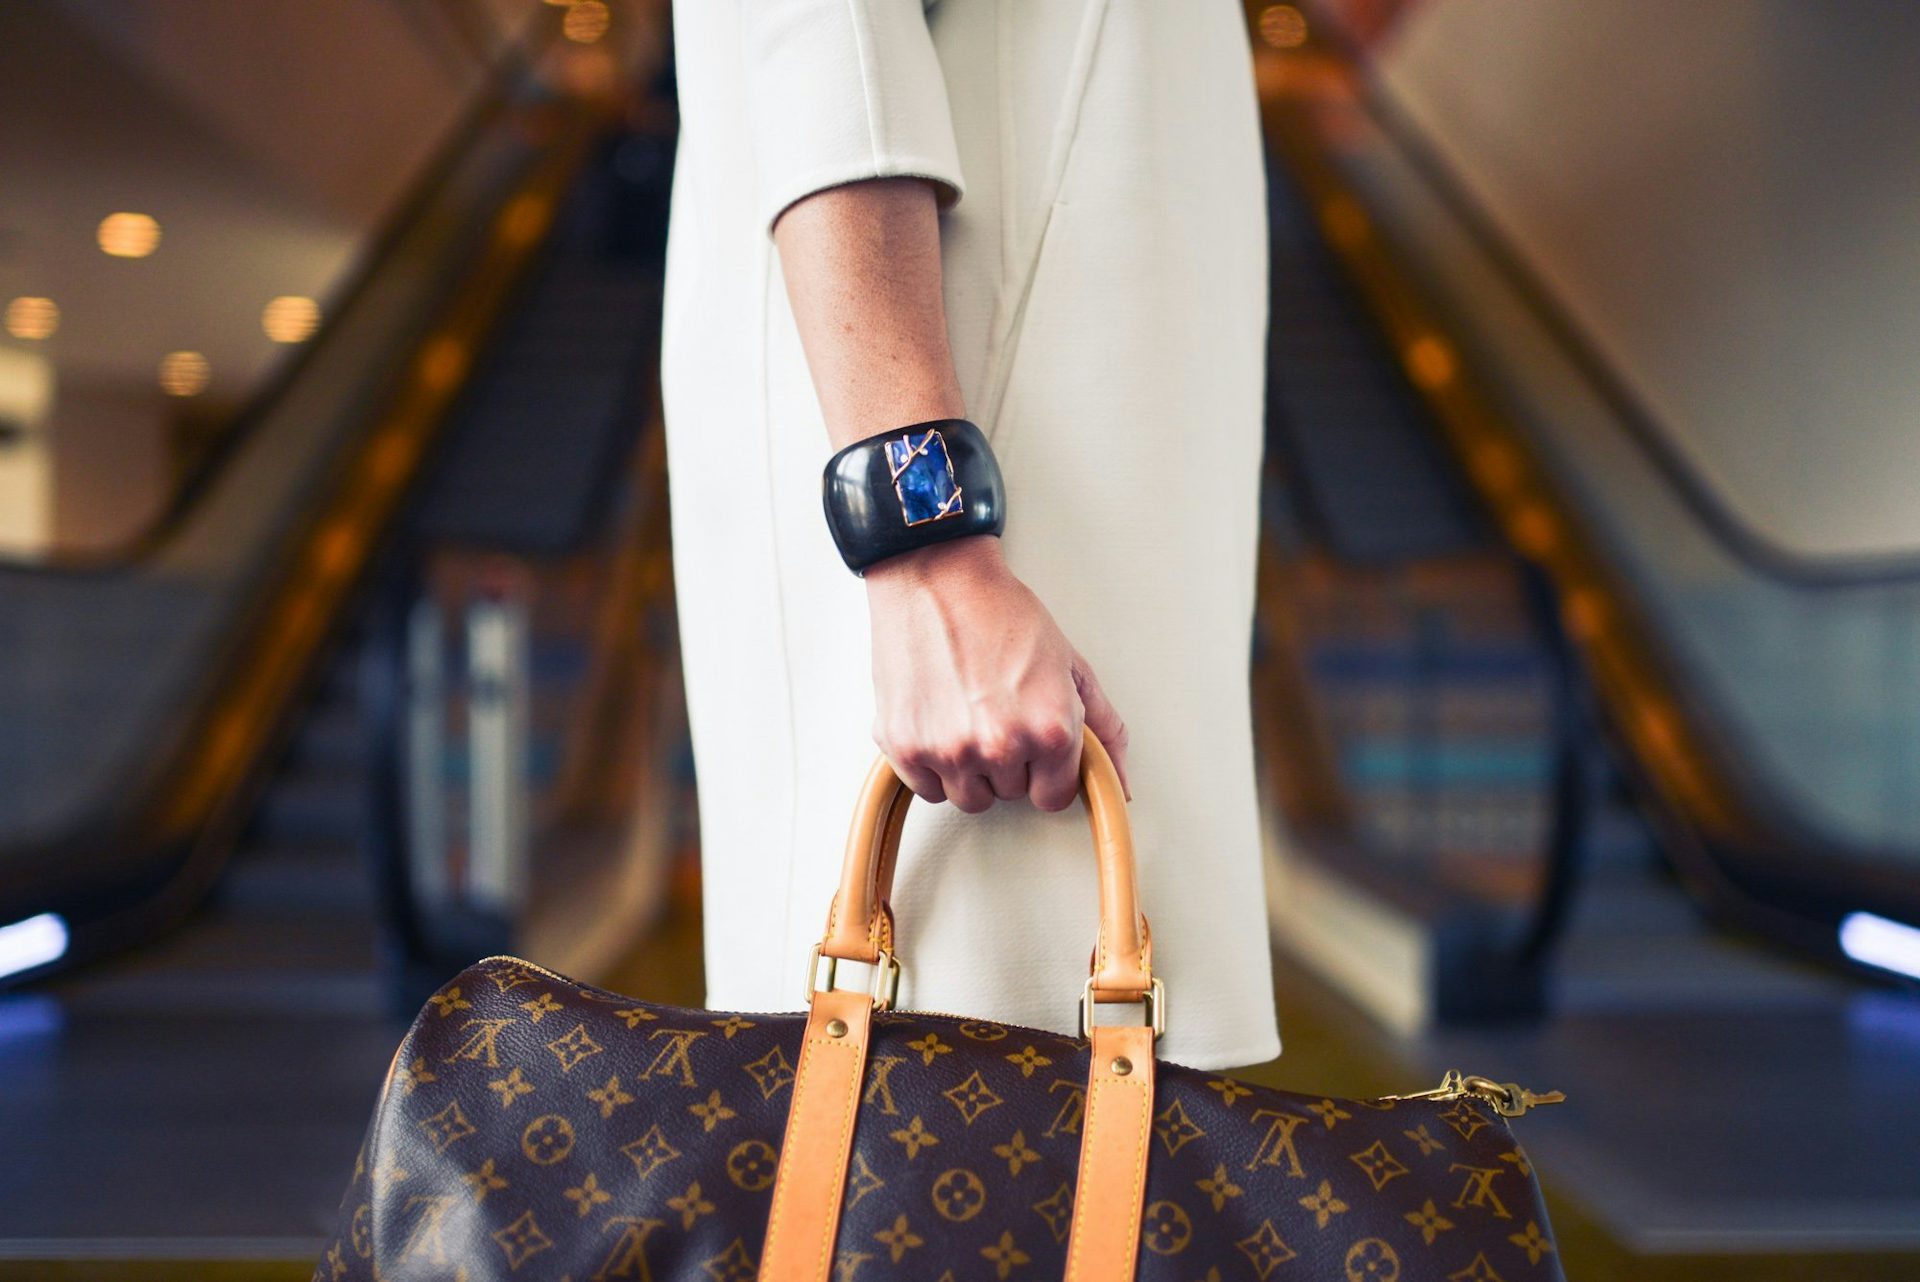 model wearing a watch holding a Louis Vuitton bag